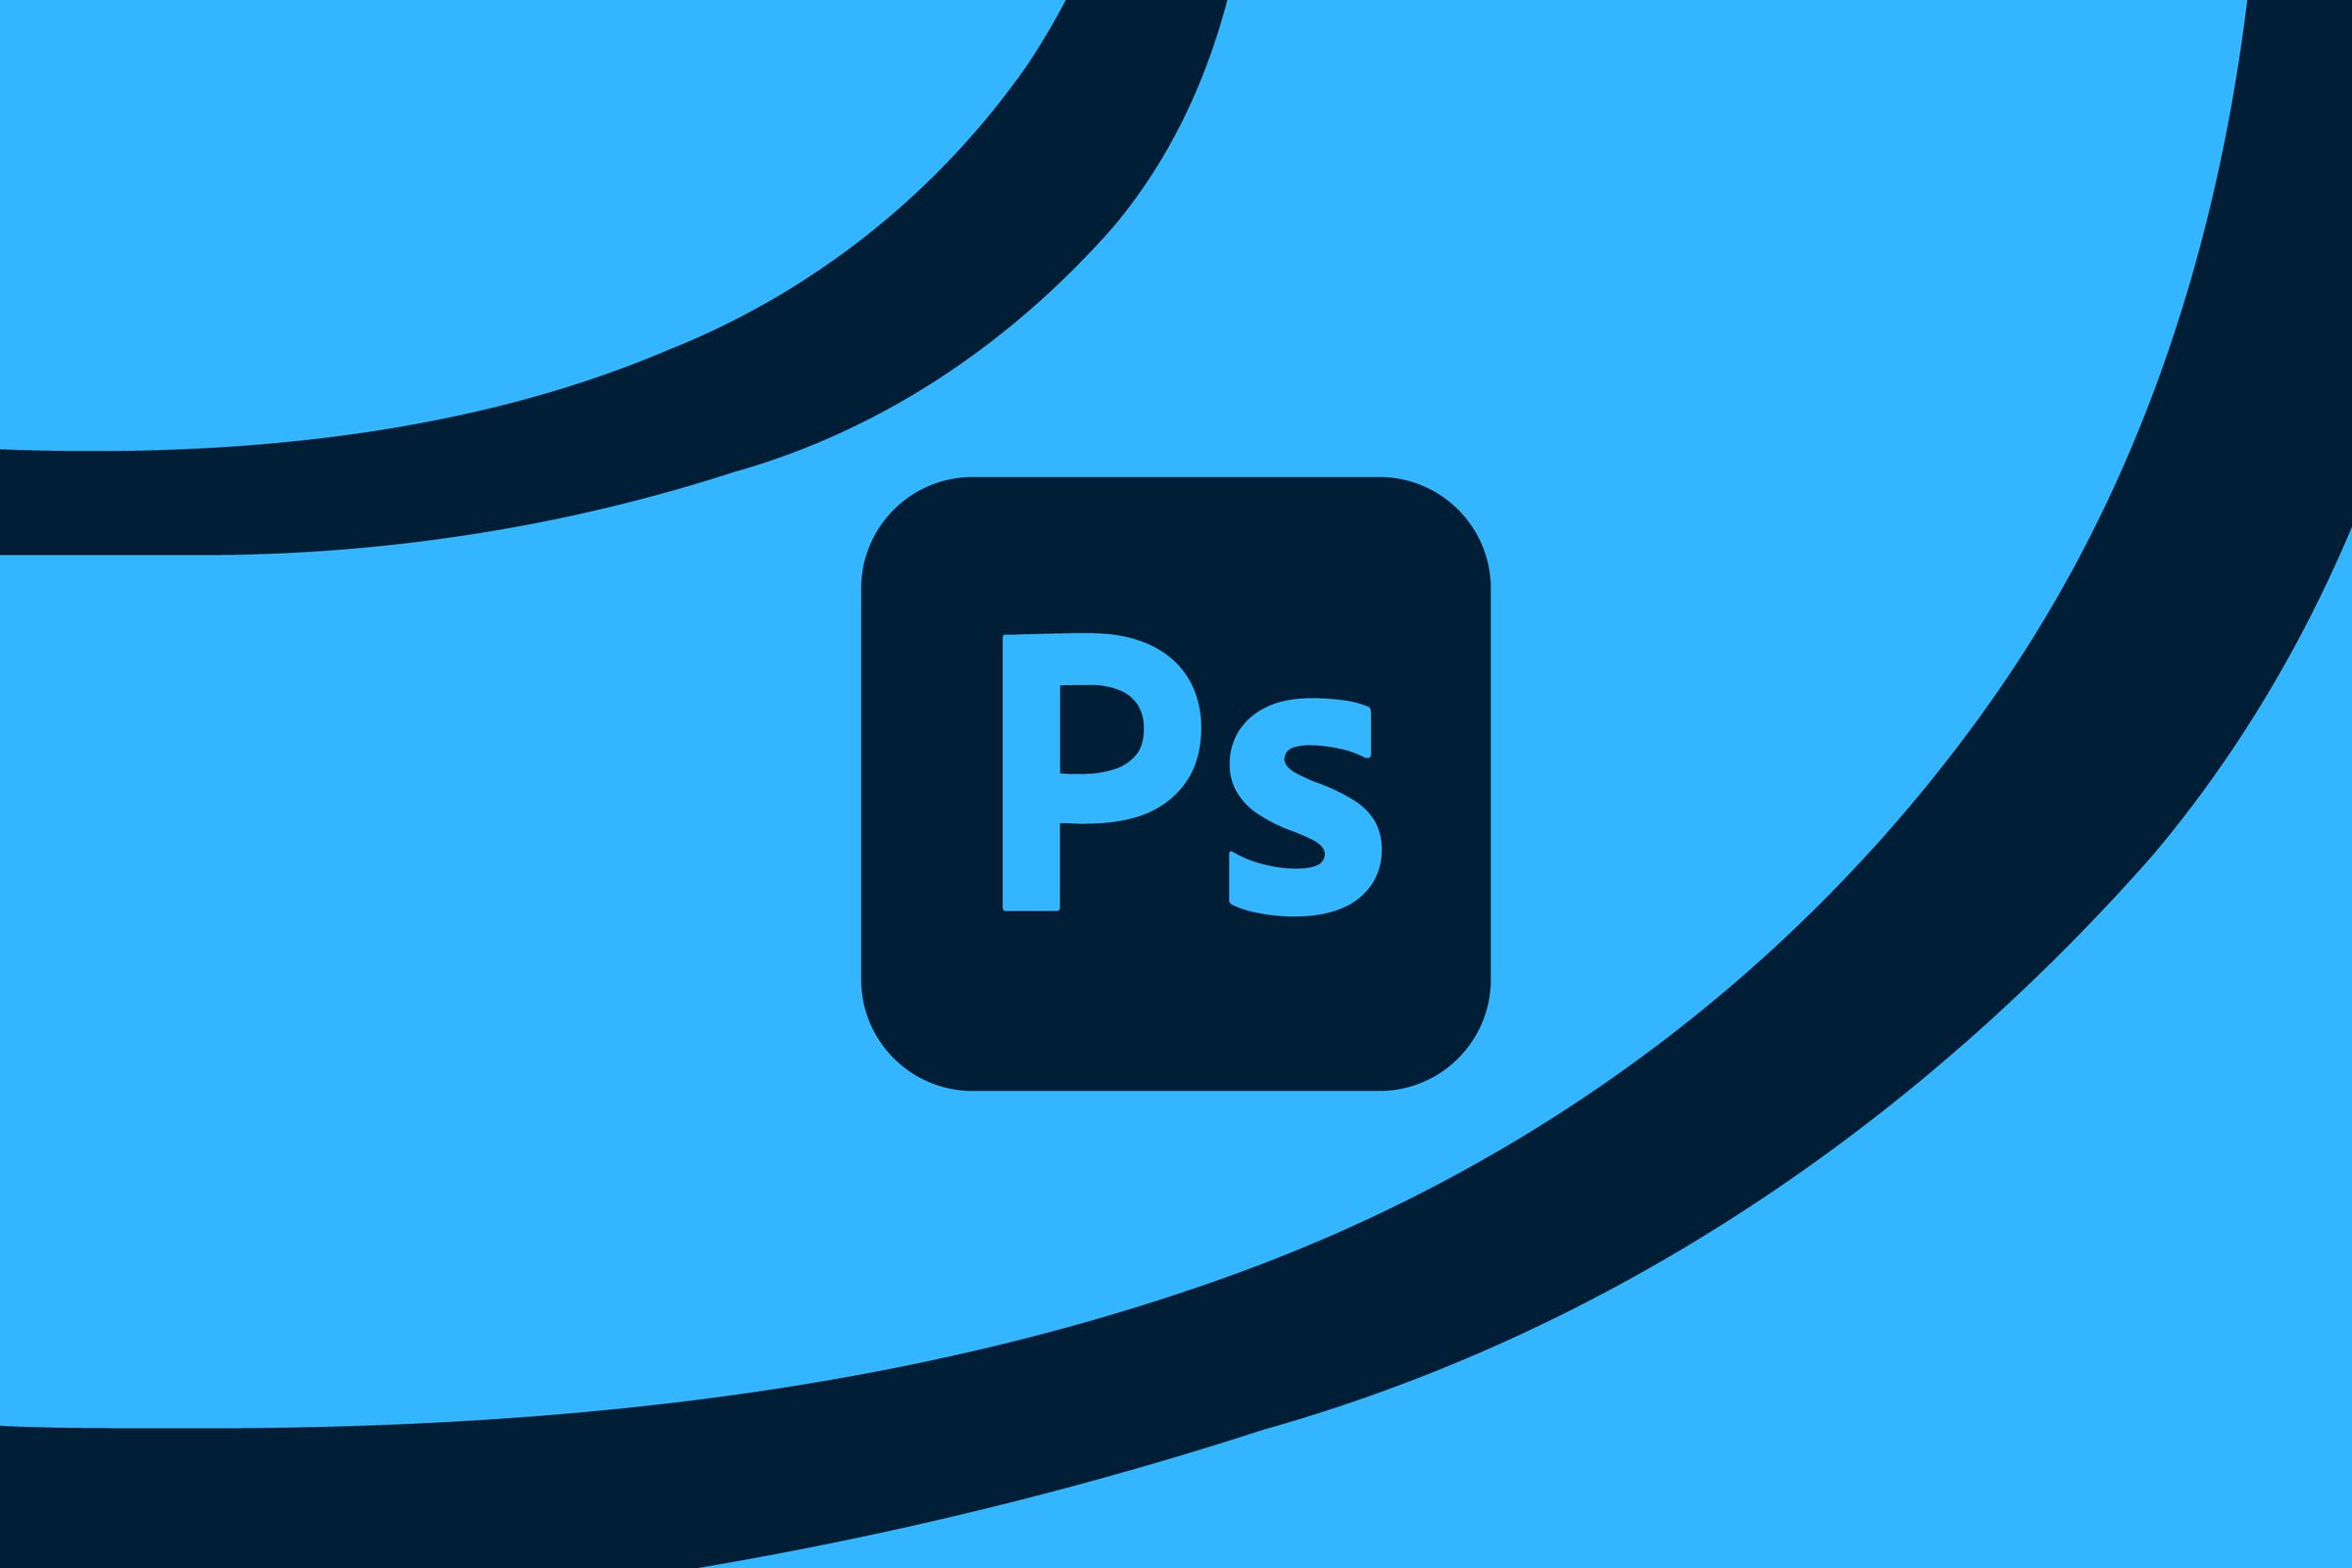 The Adobe Photoshop logo on a blue background.